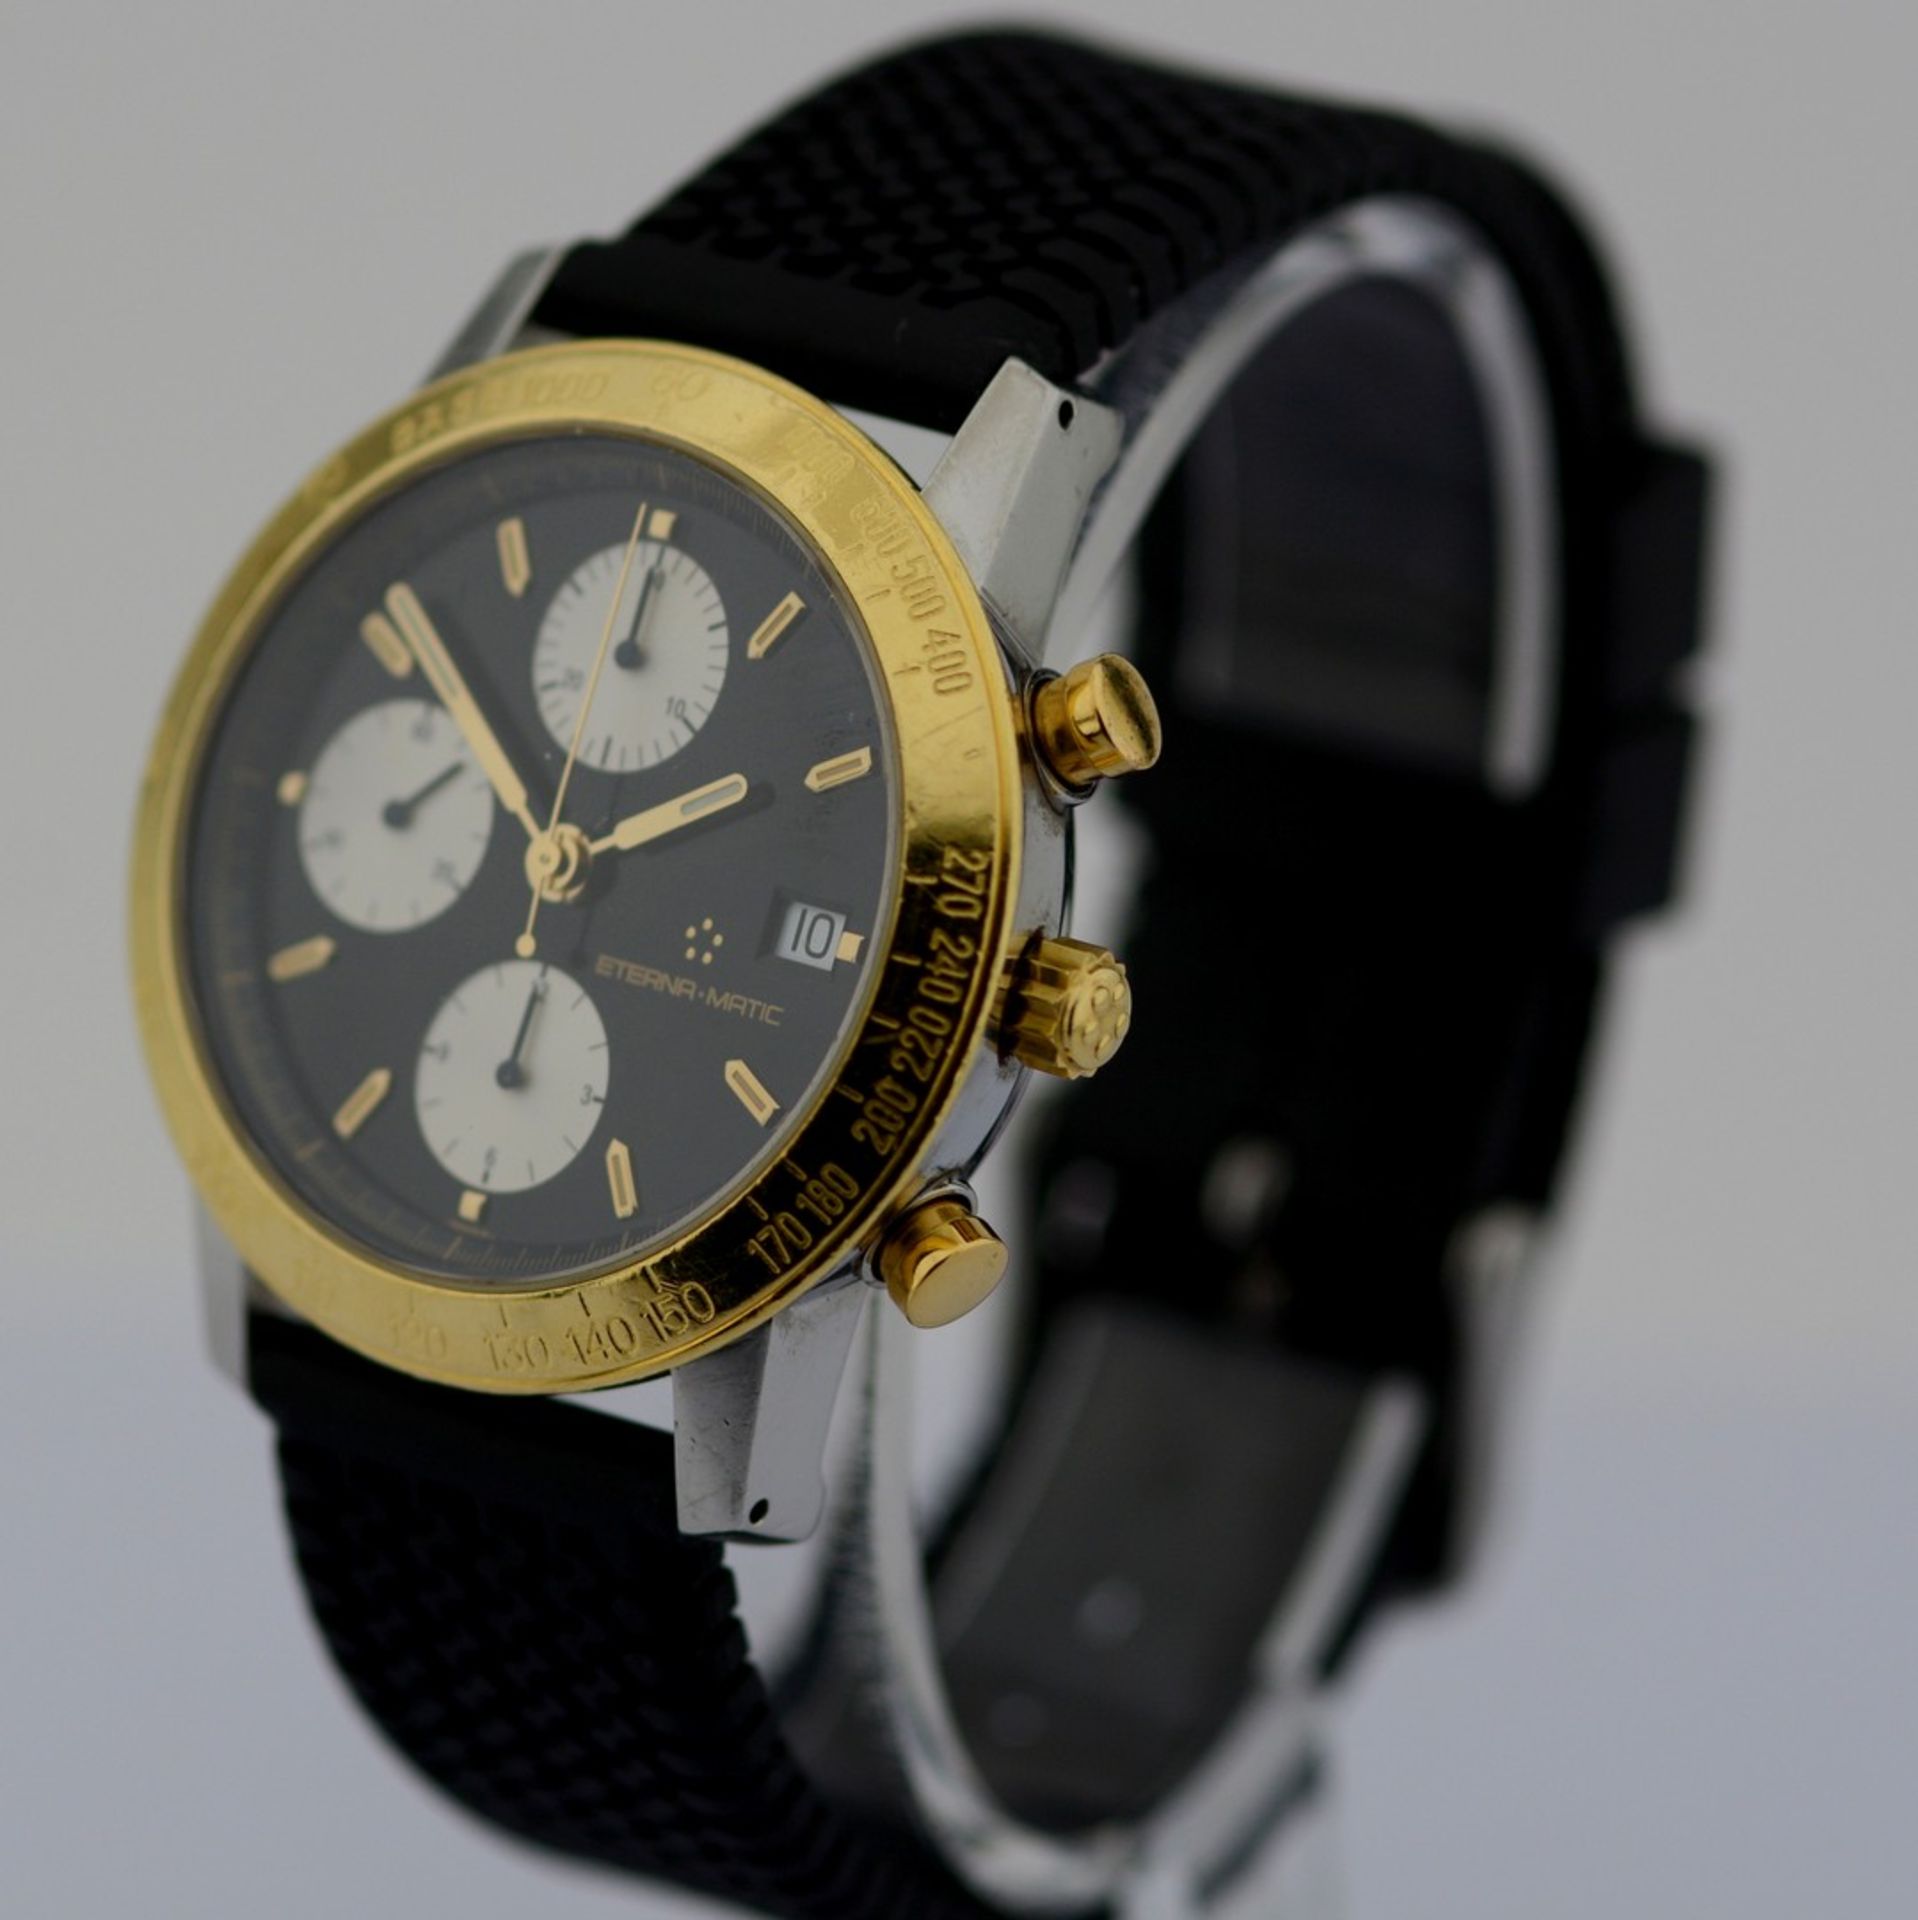 Eterna-Matic / Kontiki Chronograph - Gentlmen's Gold/Steel Wrist Watch - Image 6 of 10